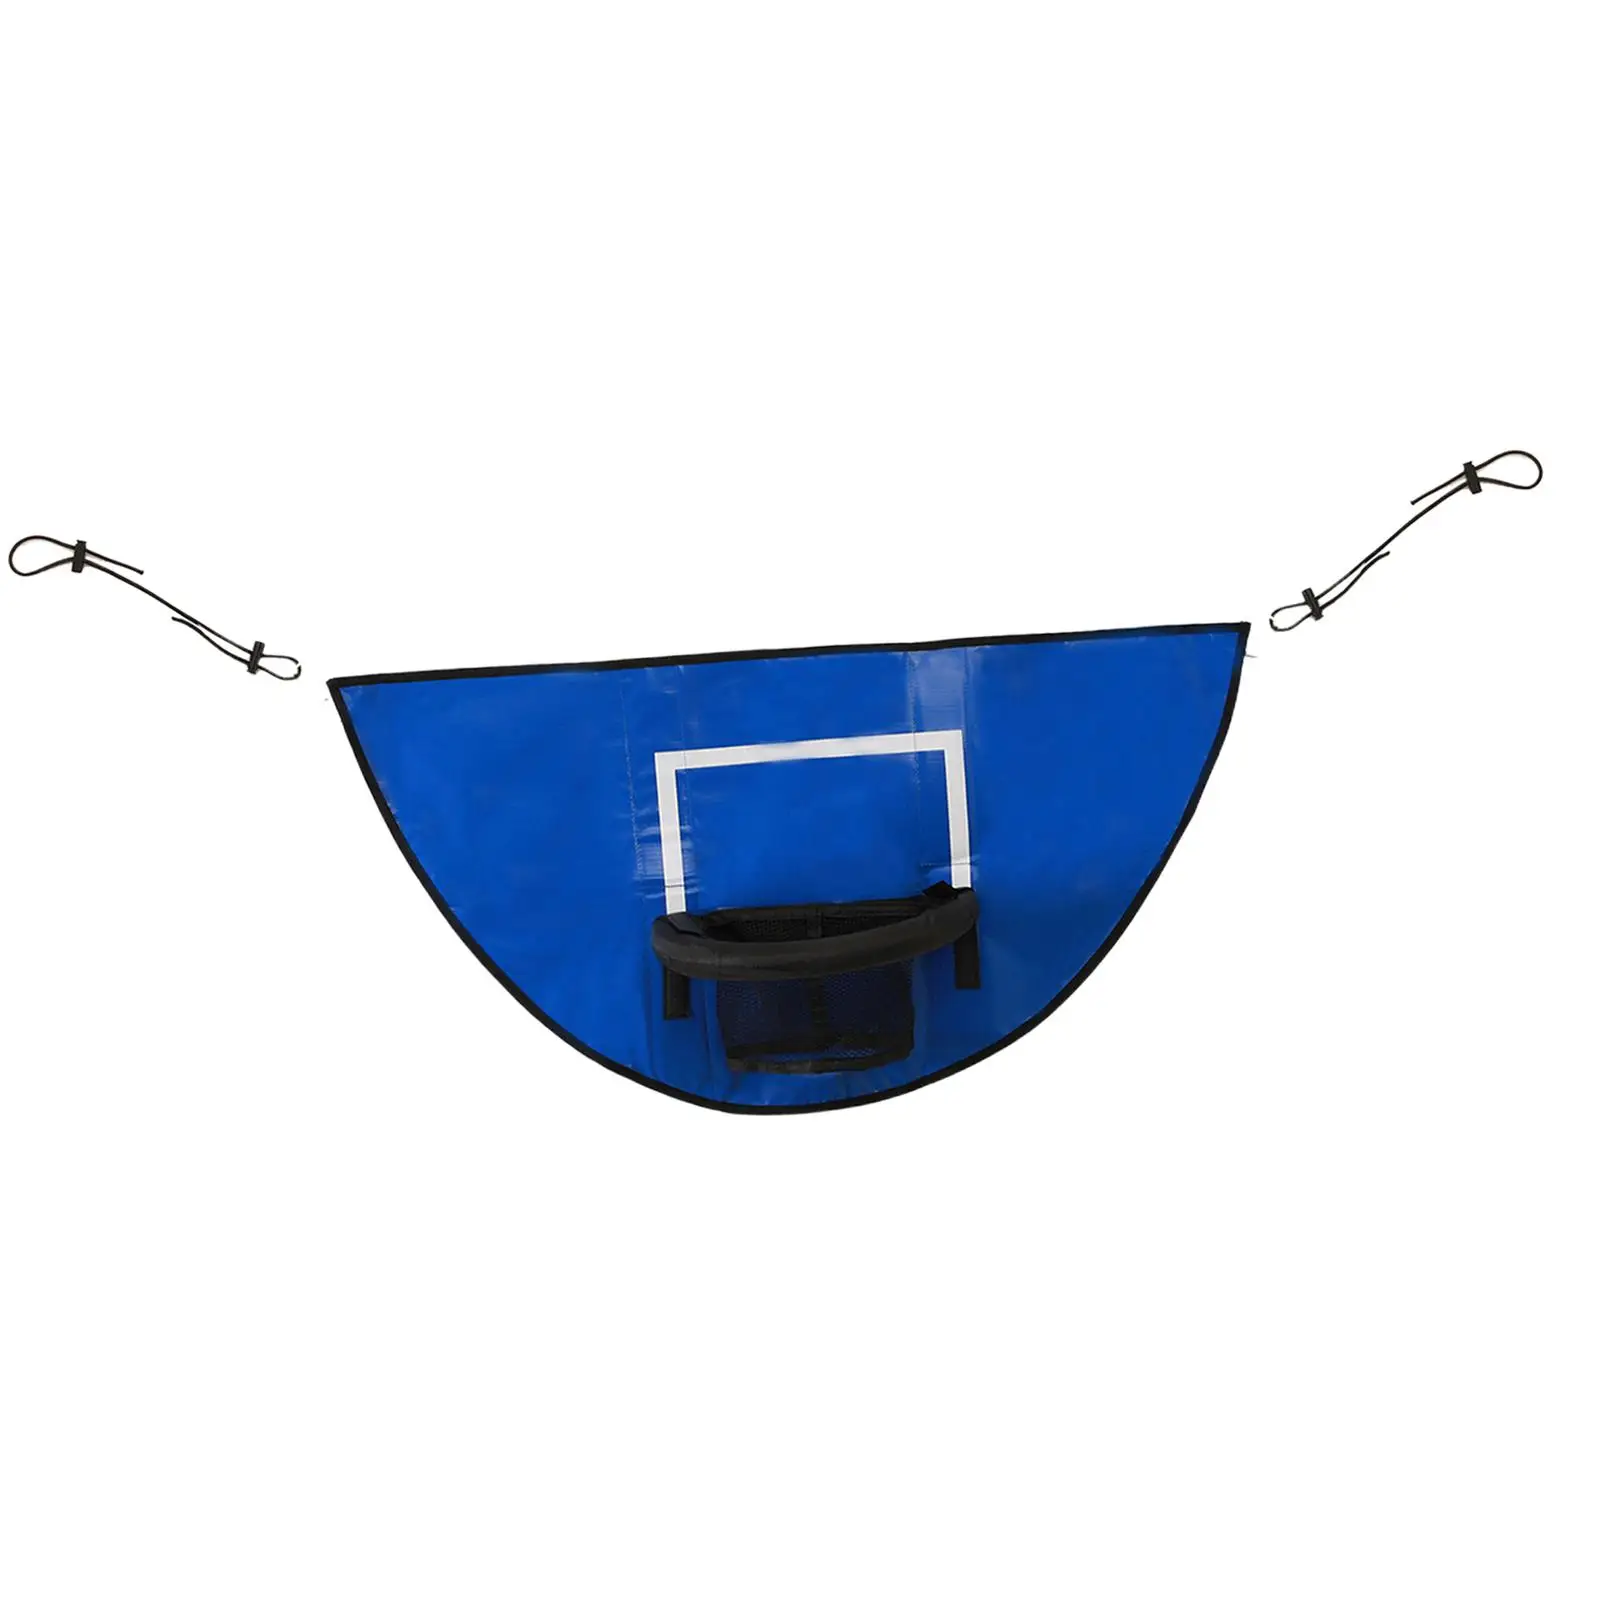 Trampoline Basketball Hoop Attachment Sun Protection Basketball Frame Basketball Goal for Game Boys Girls Kids Garden Children